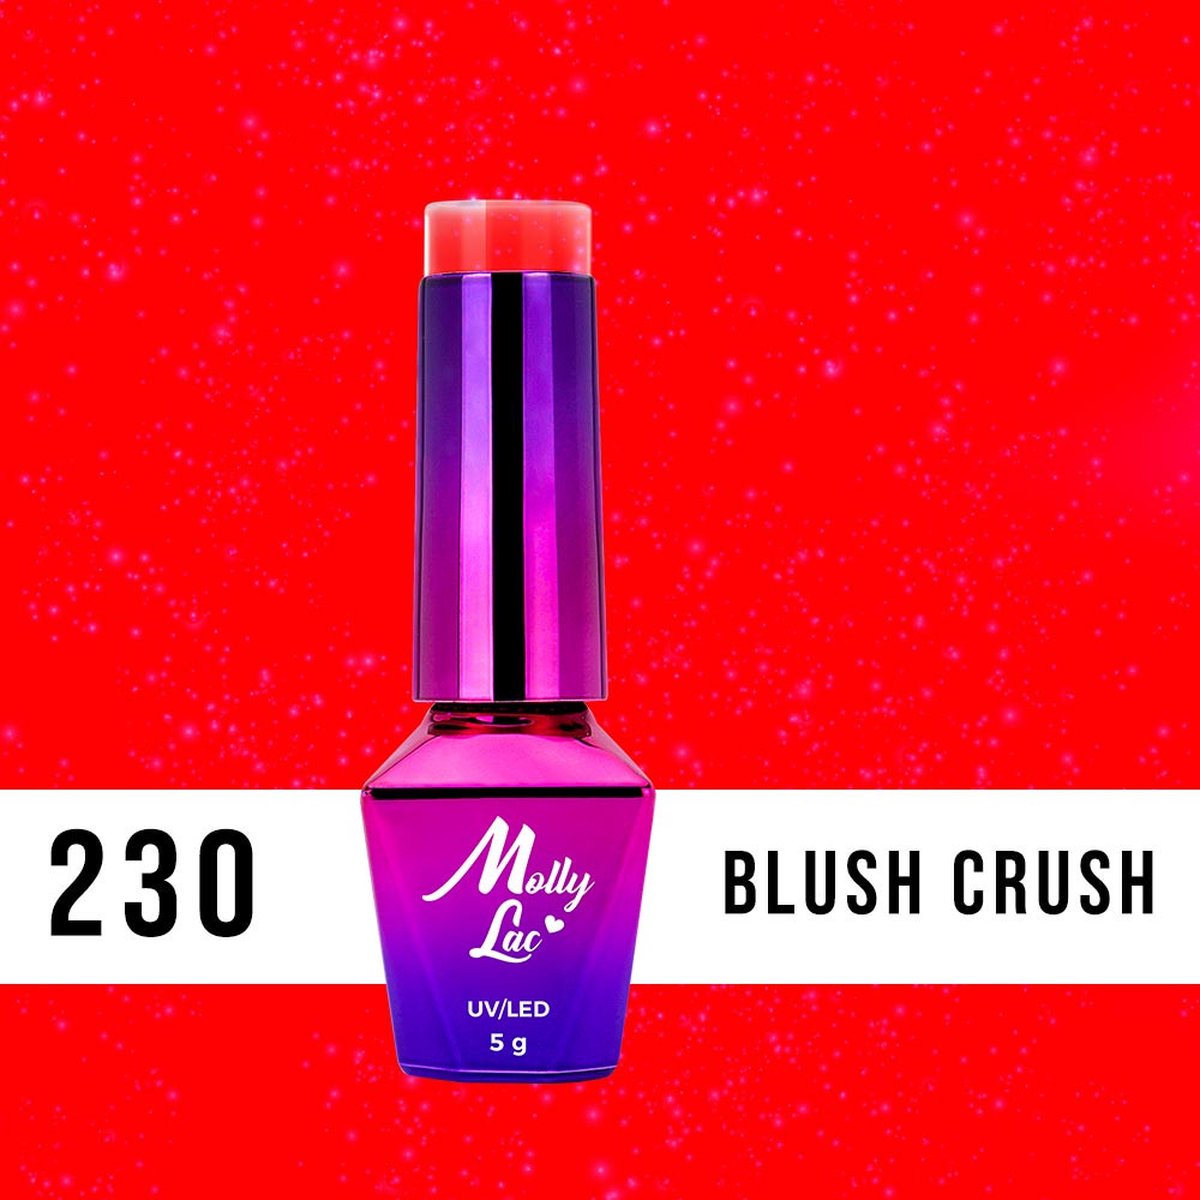 Molly Lac Glowing time - Blush Crush nr 230 5ml